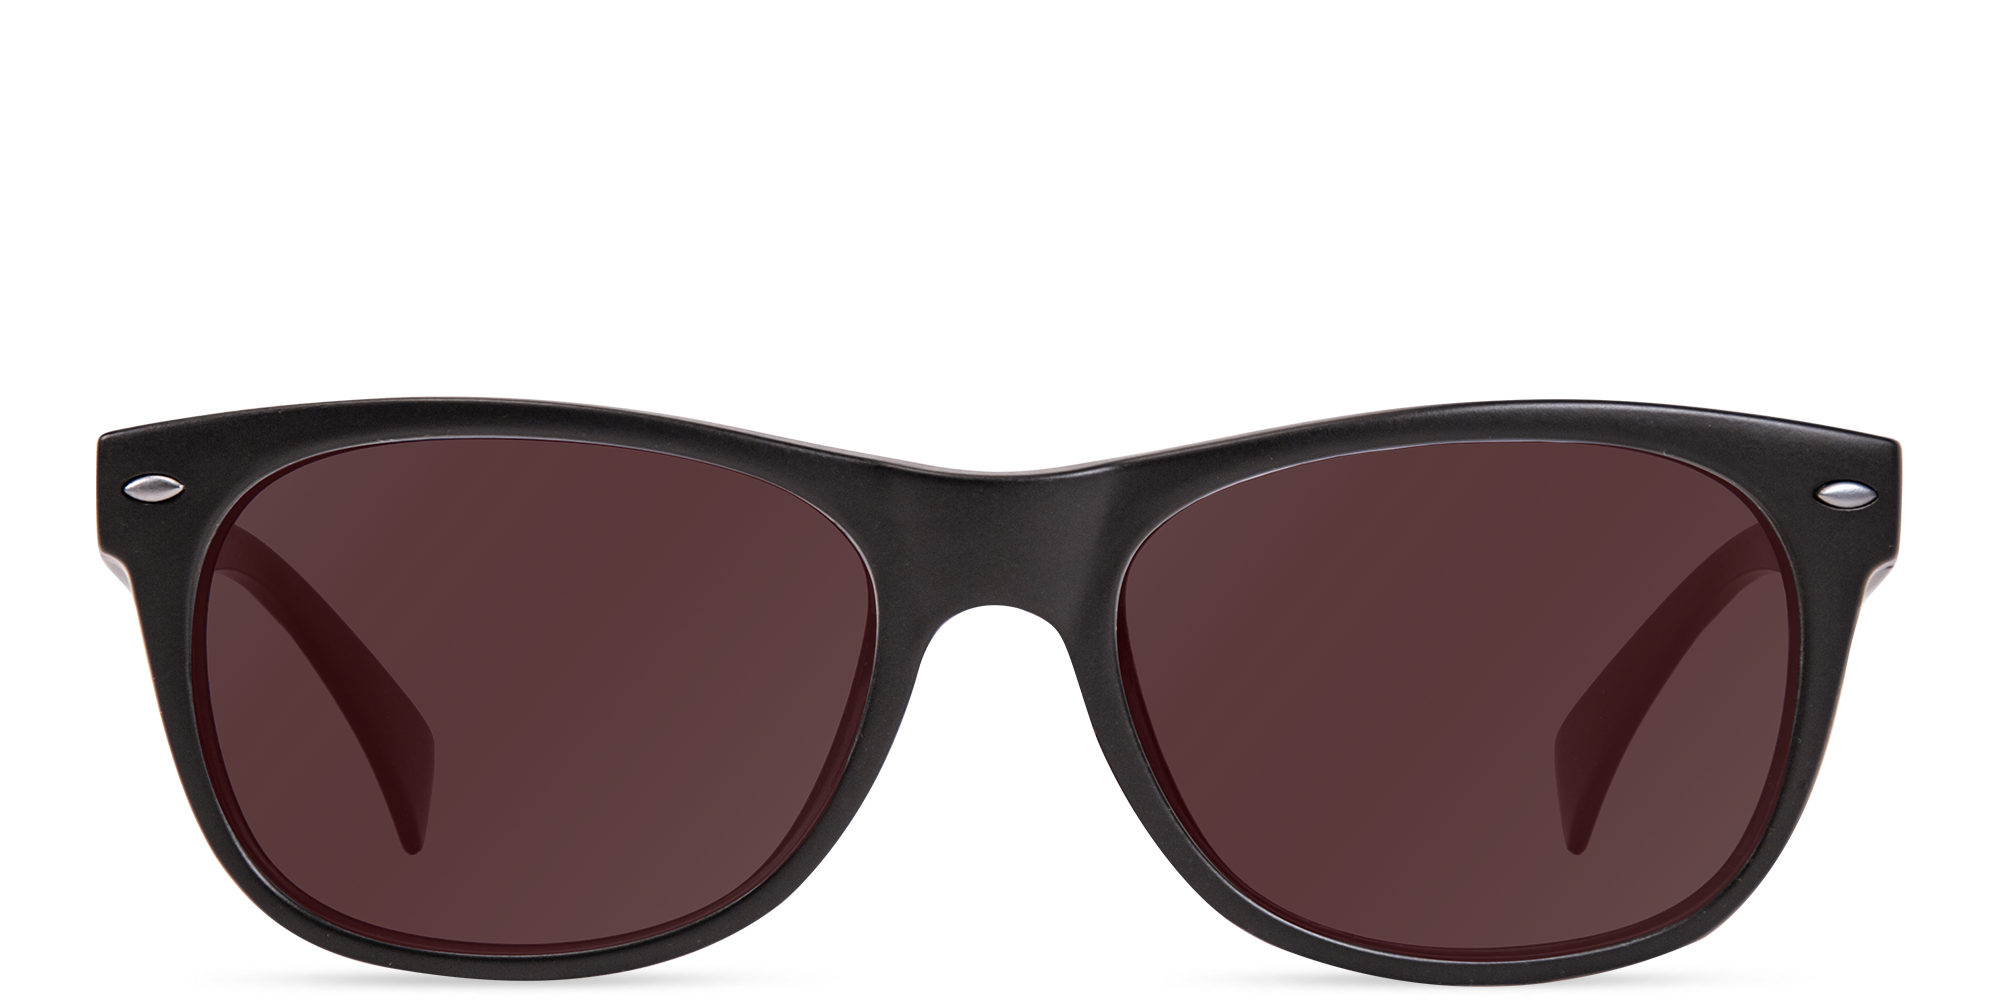 Never Summer Polarized Sunglasses | Shop Apparel